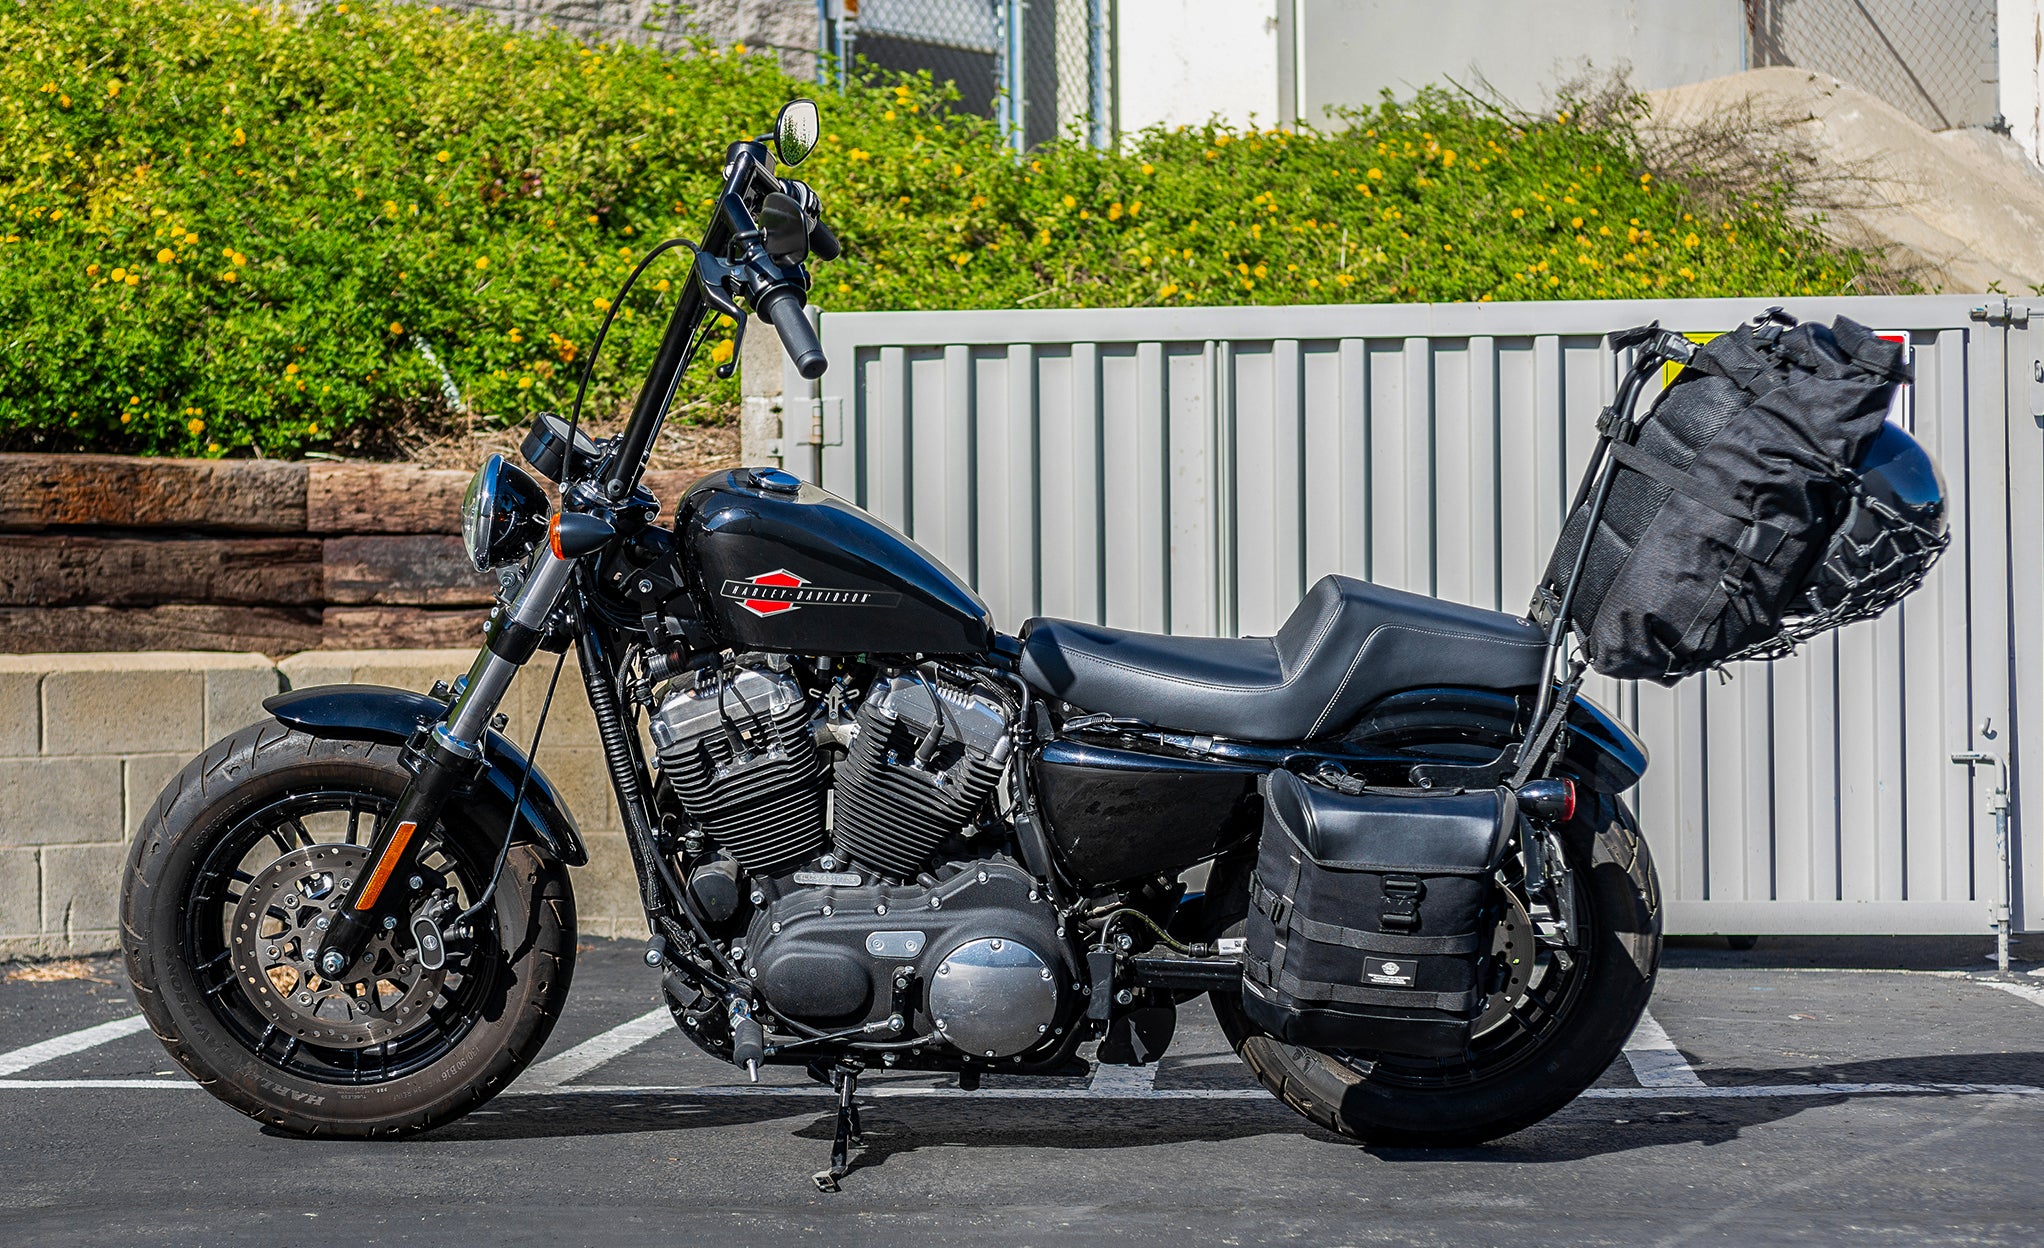 32L - Vanguard Large Dry Harley Davidson Motorcycle Backpack @expand